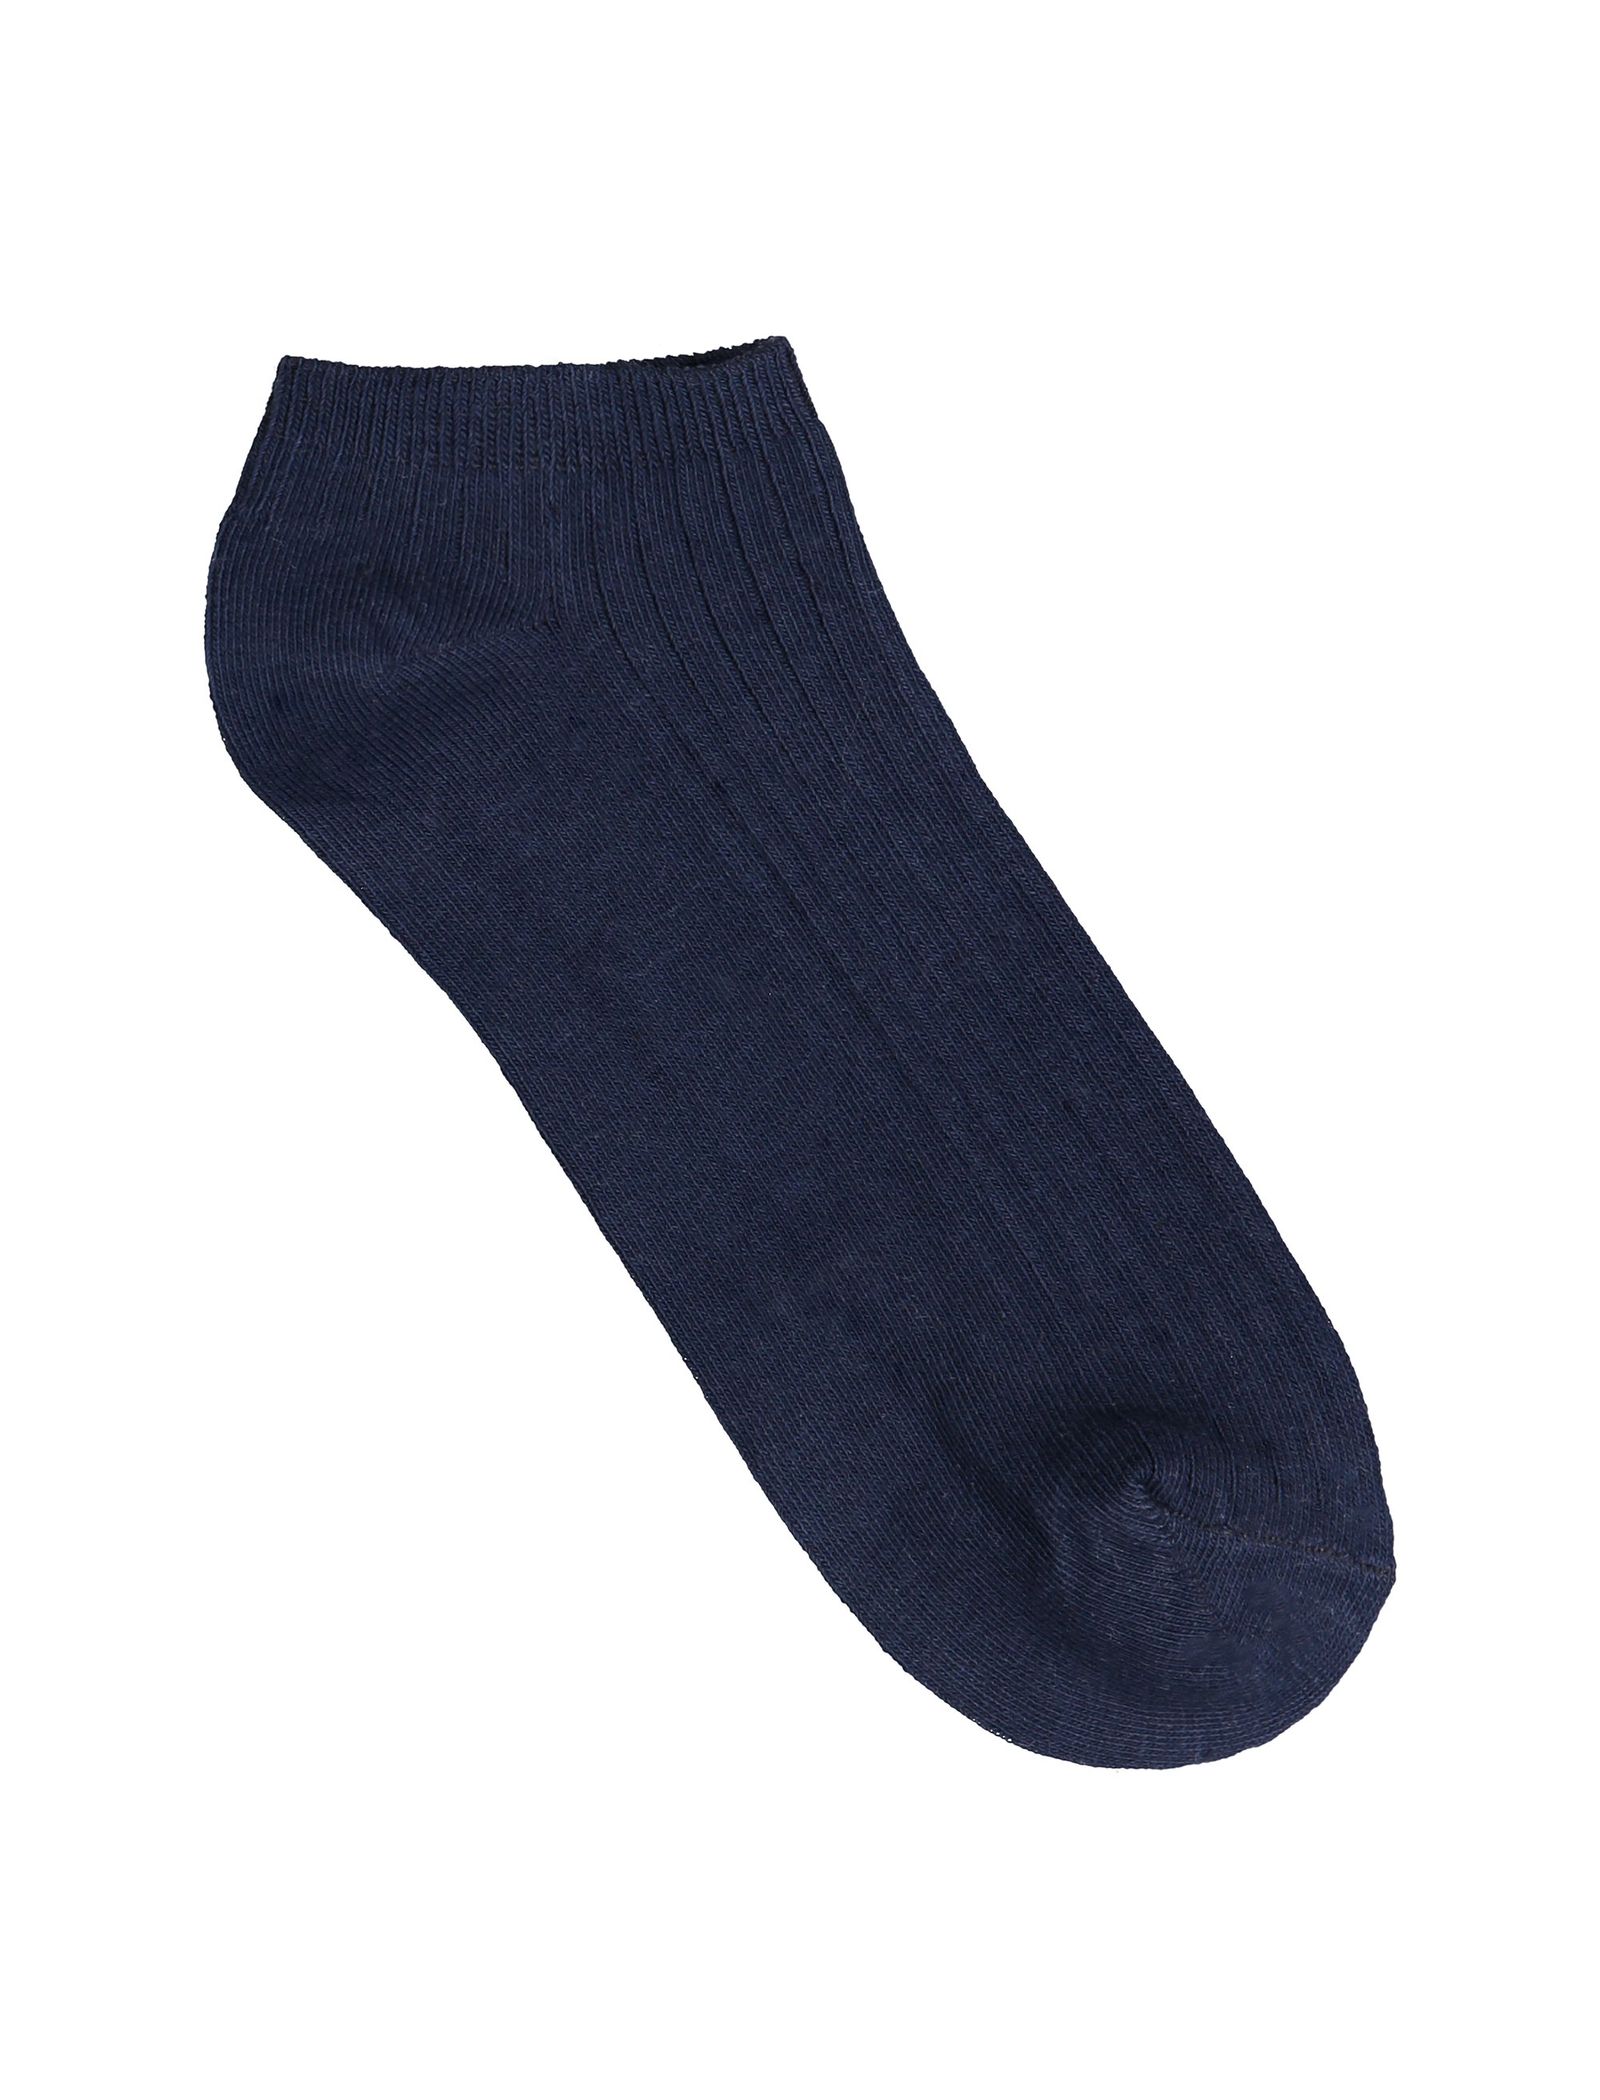 جوراب ساق کوتاه مردانه بسته 4 عددی - دفکتو - چند رنگ - 10